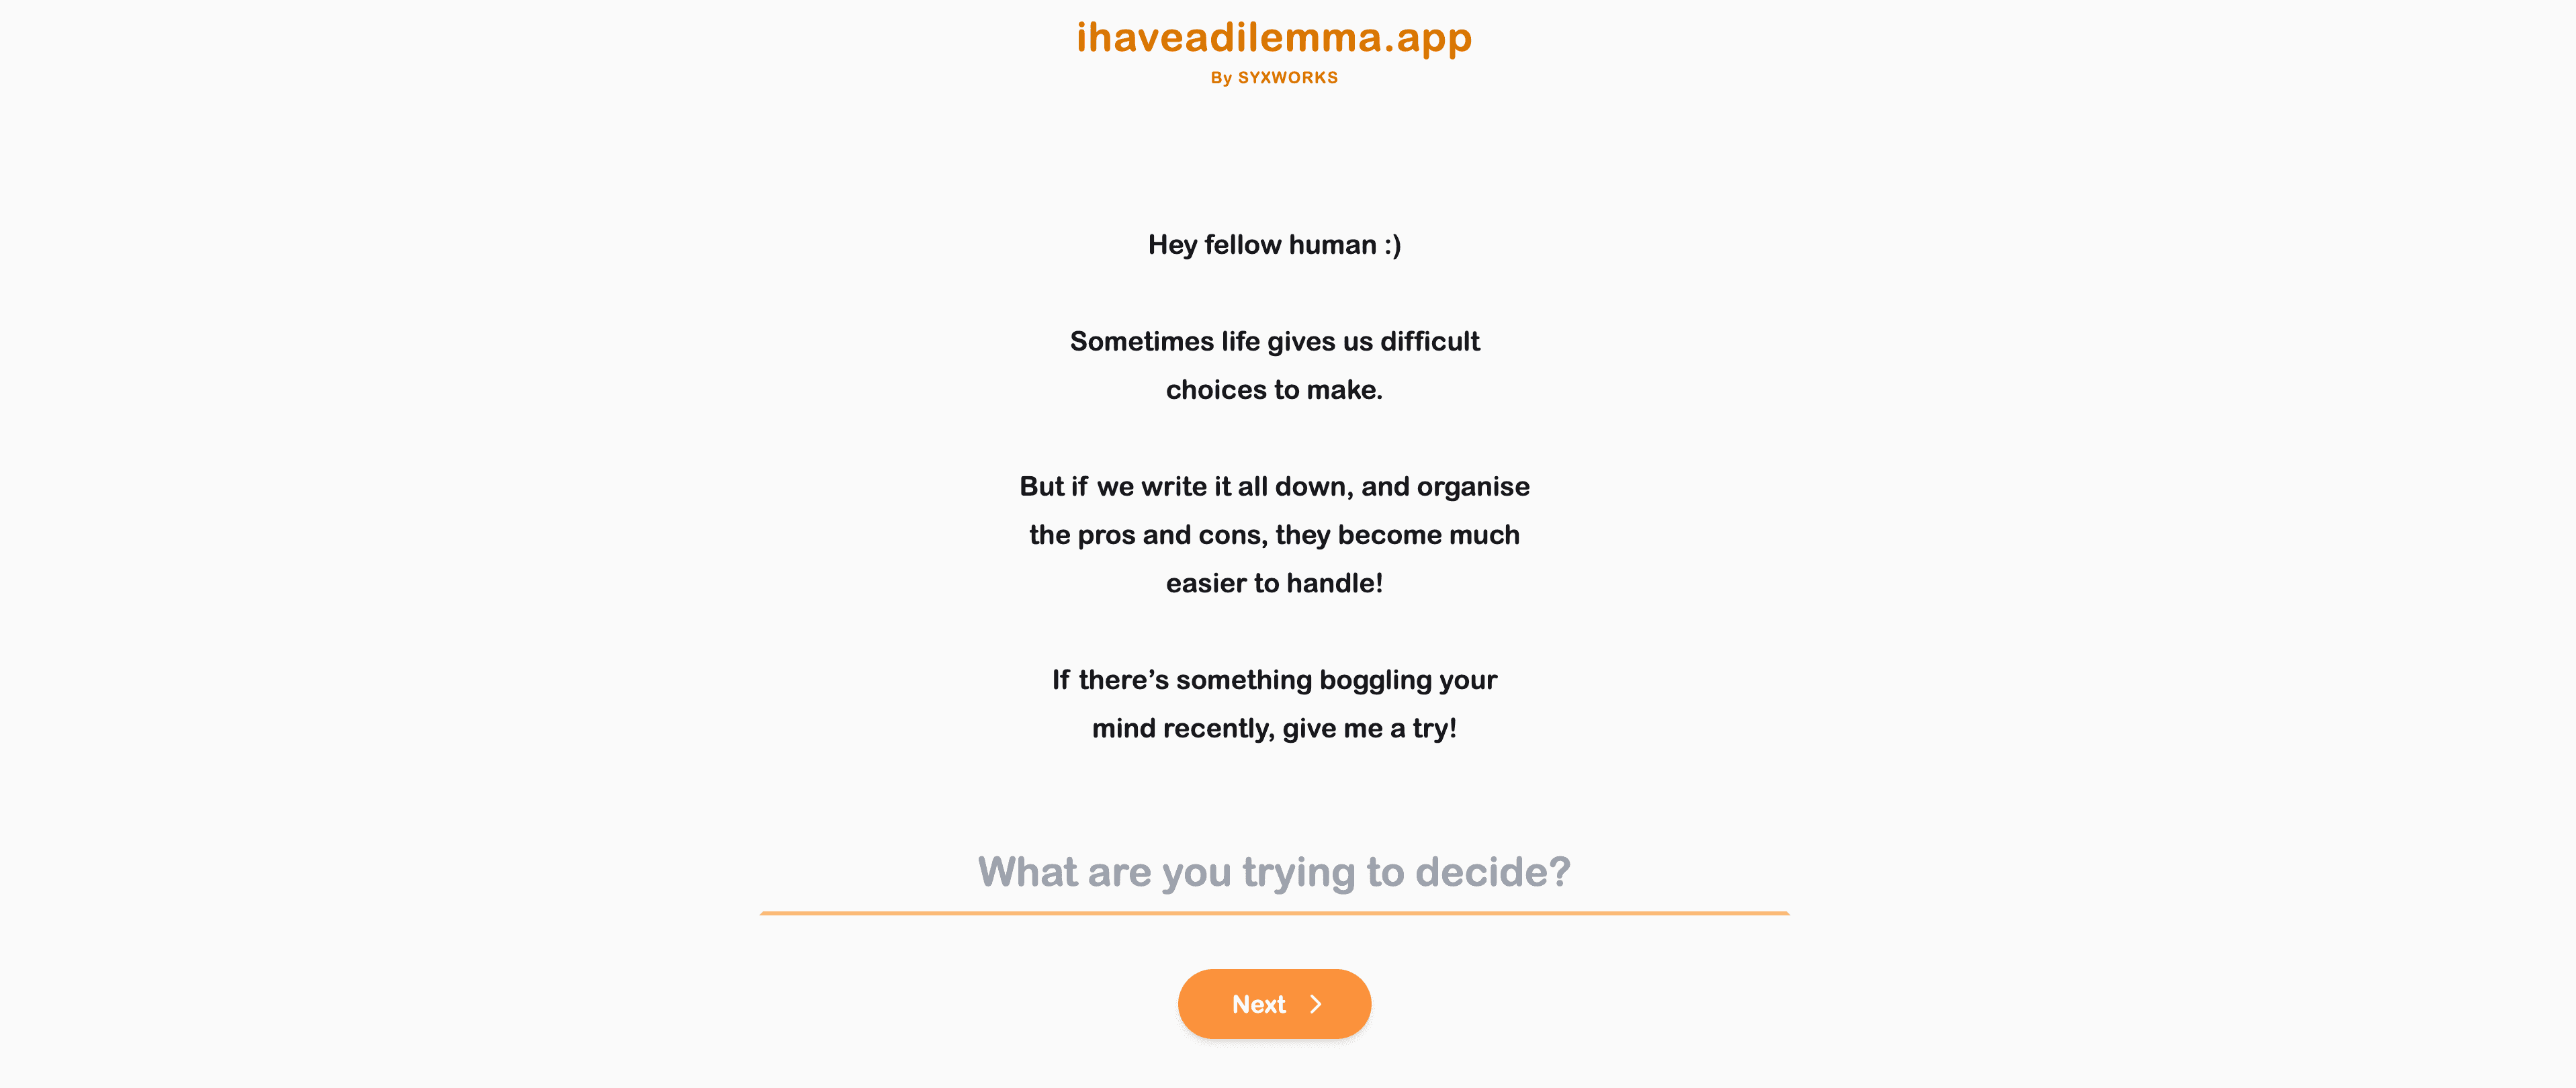 "I Have A Dilemma" app screenshot